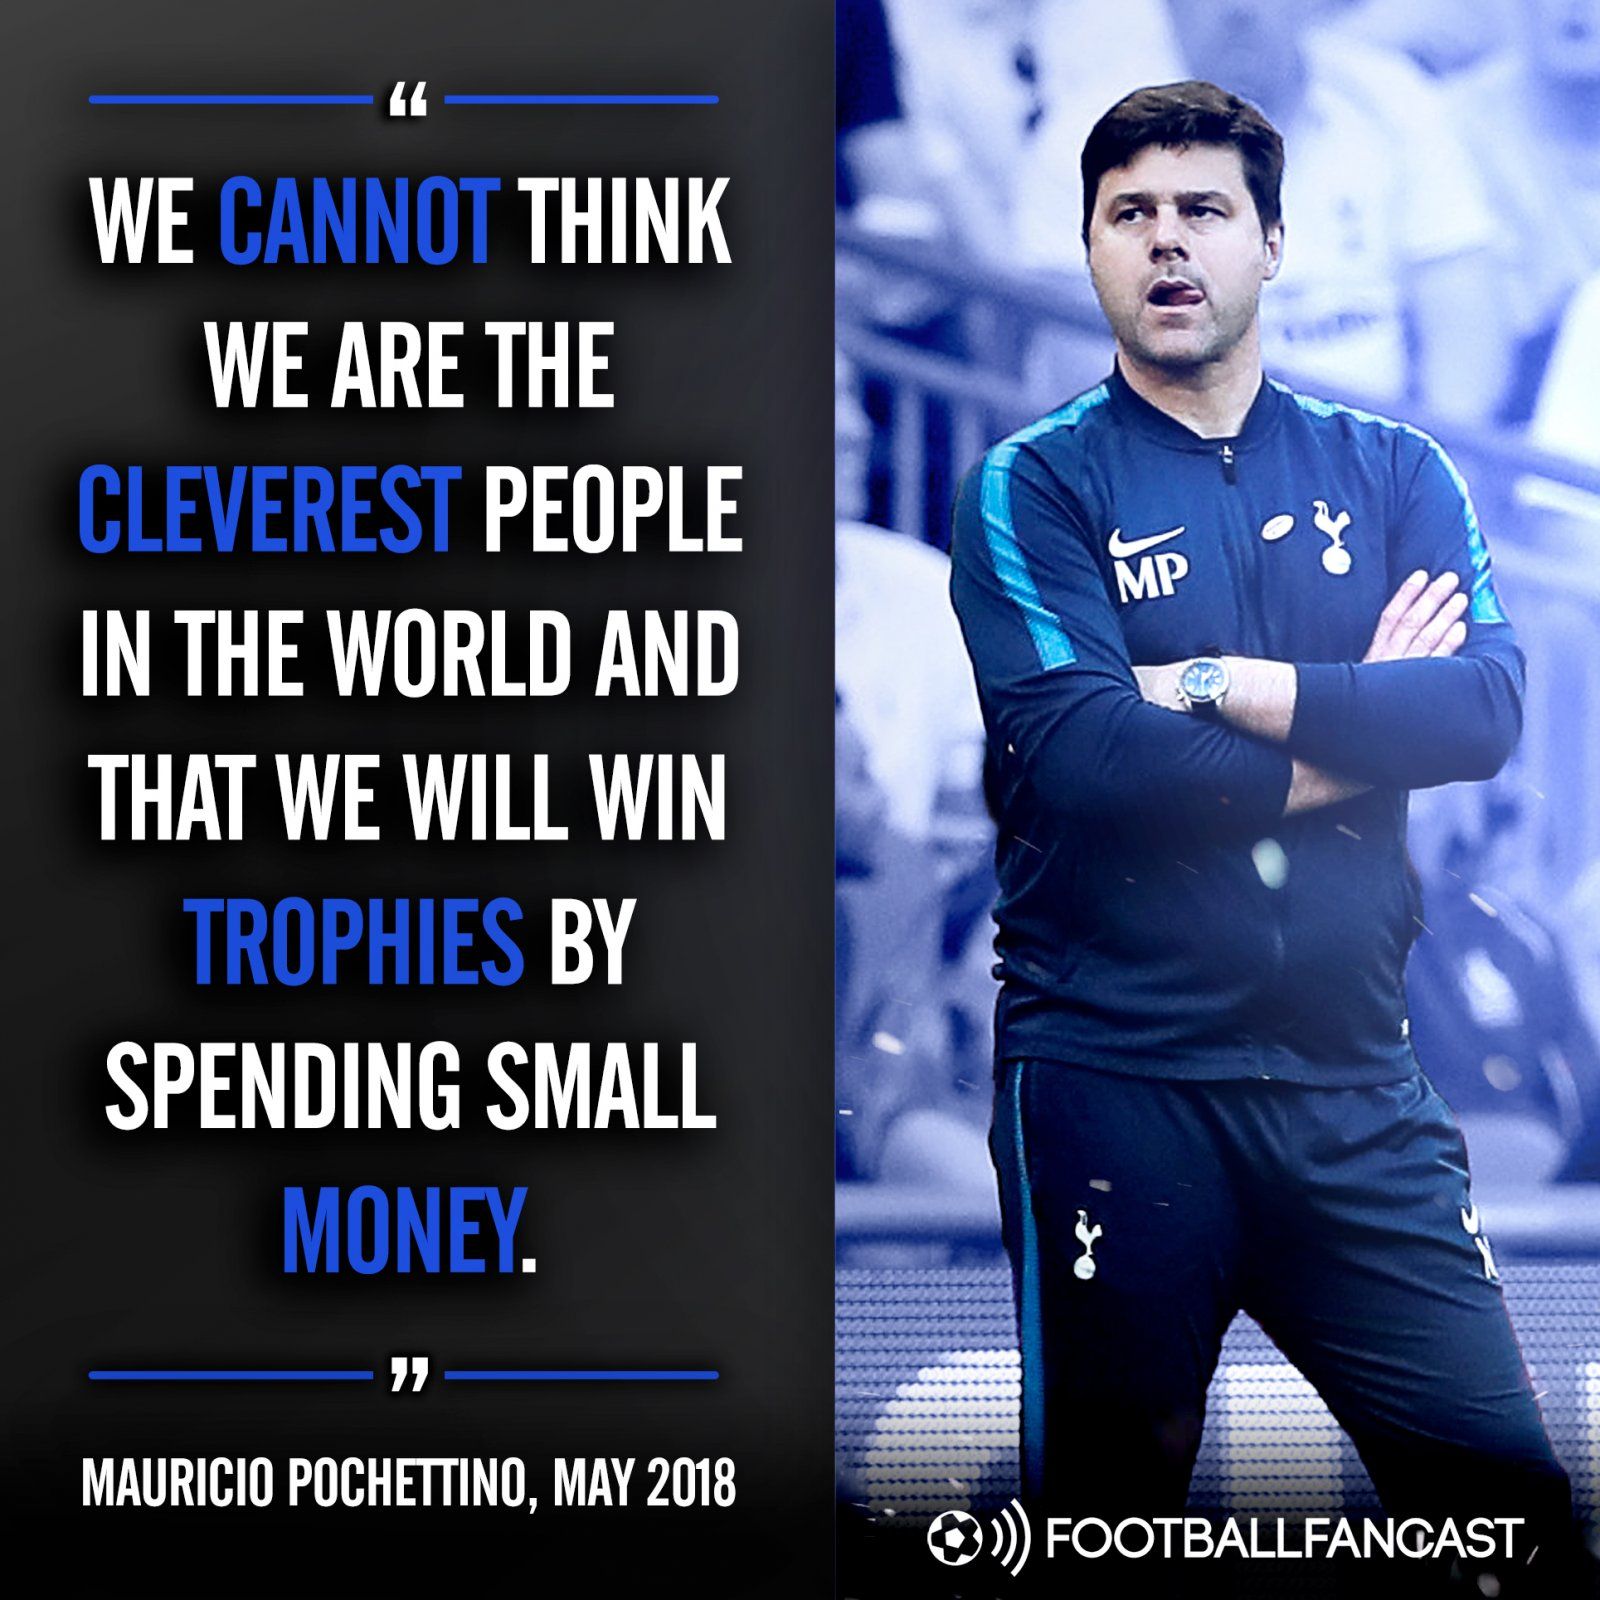 Mauricio Pochettino on Tottenham's spending habits